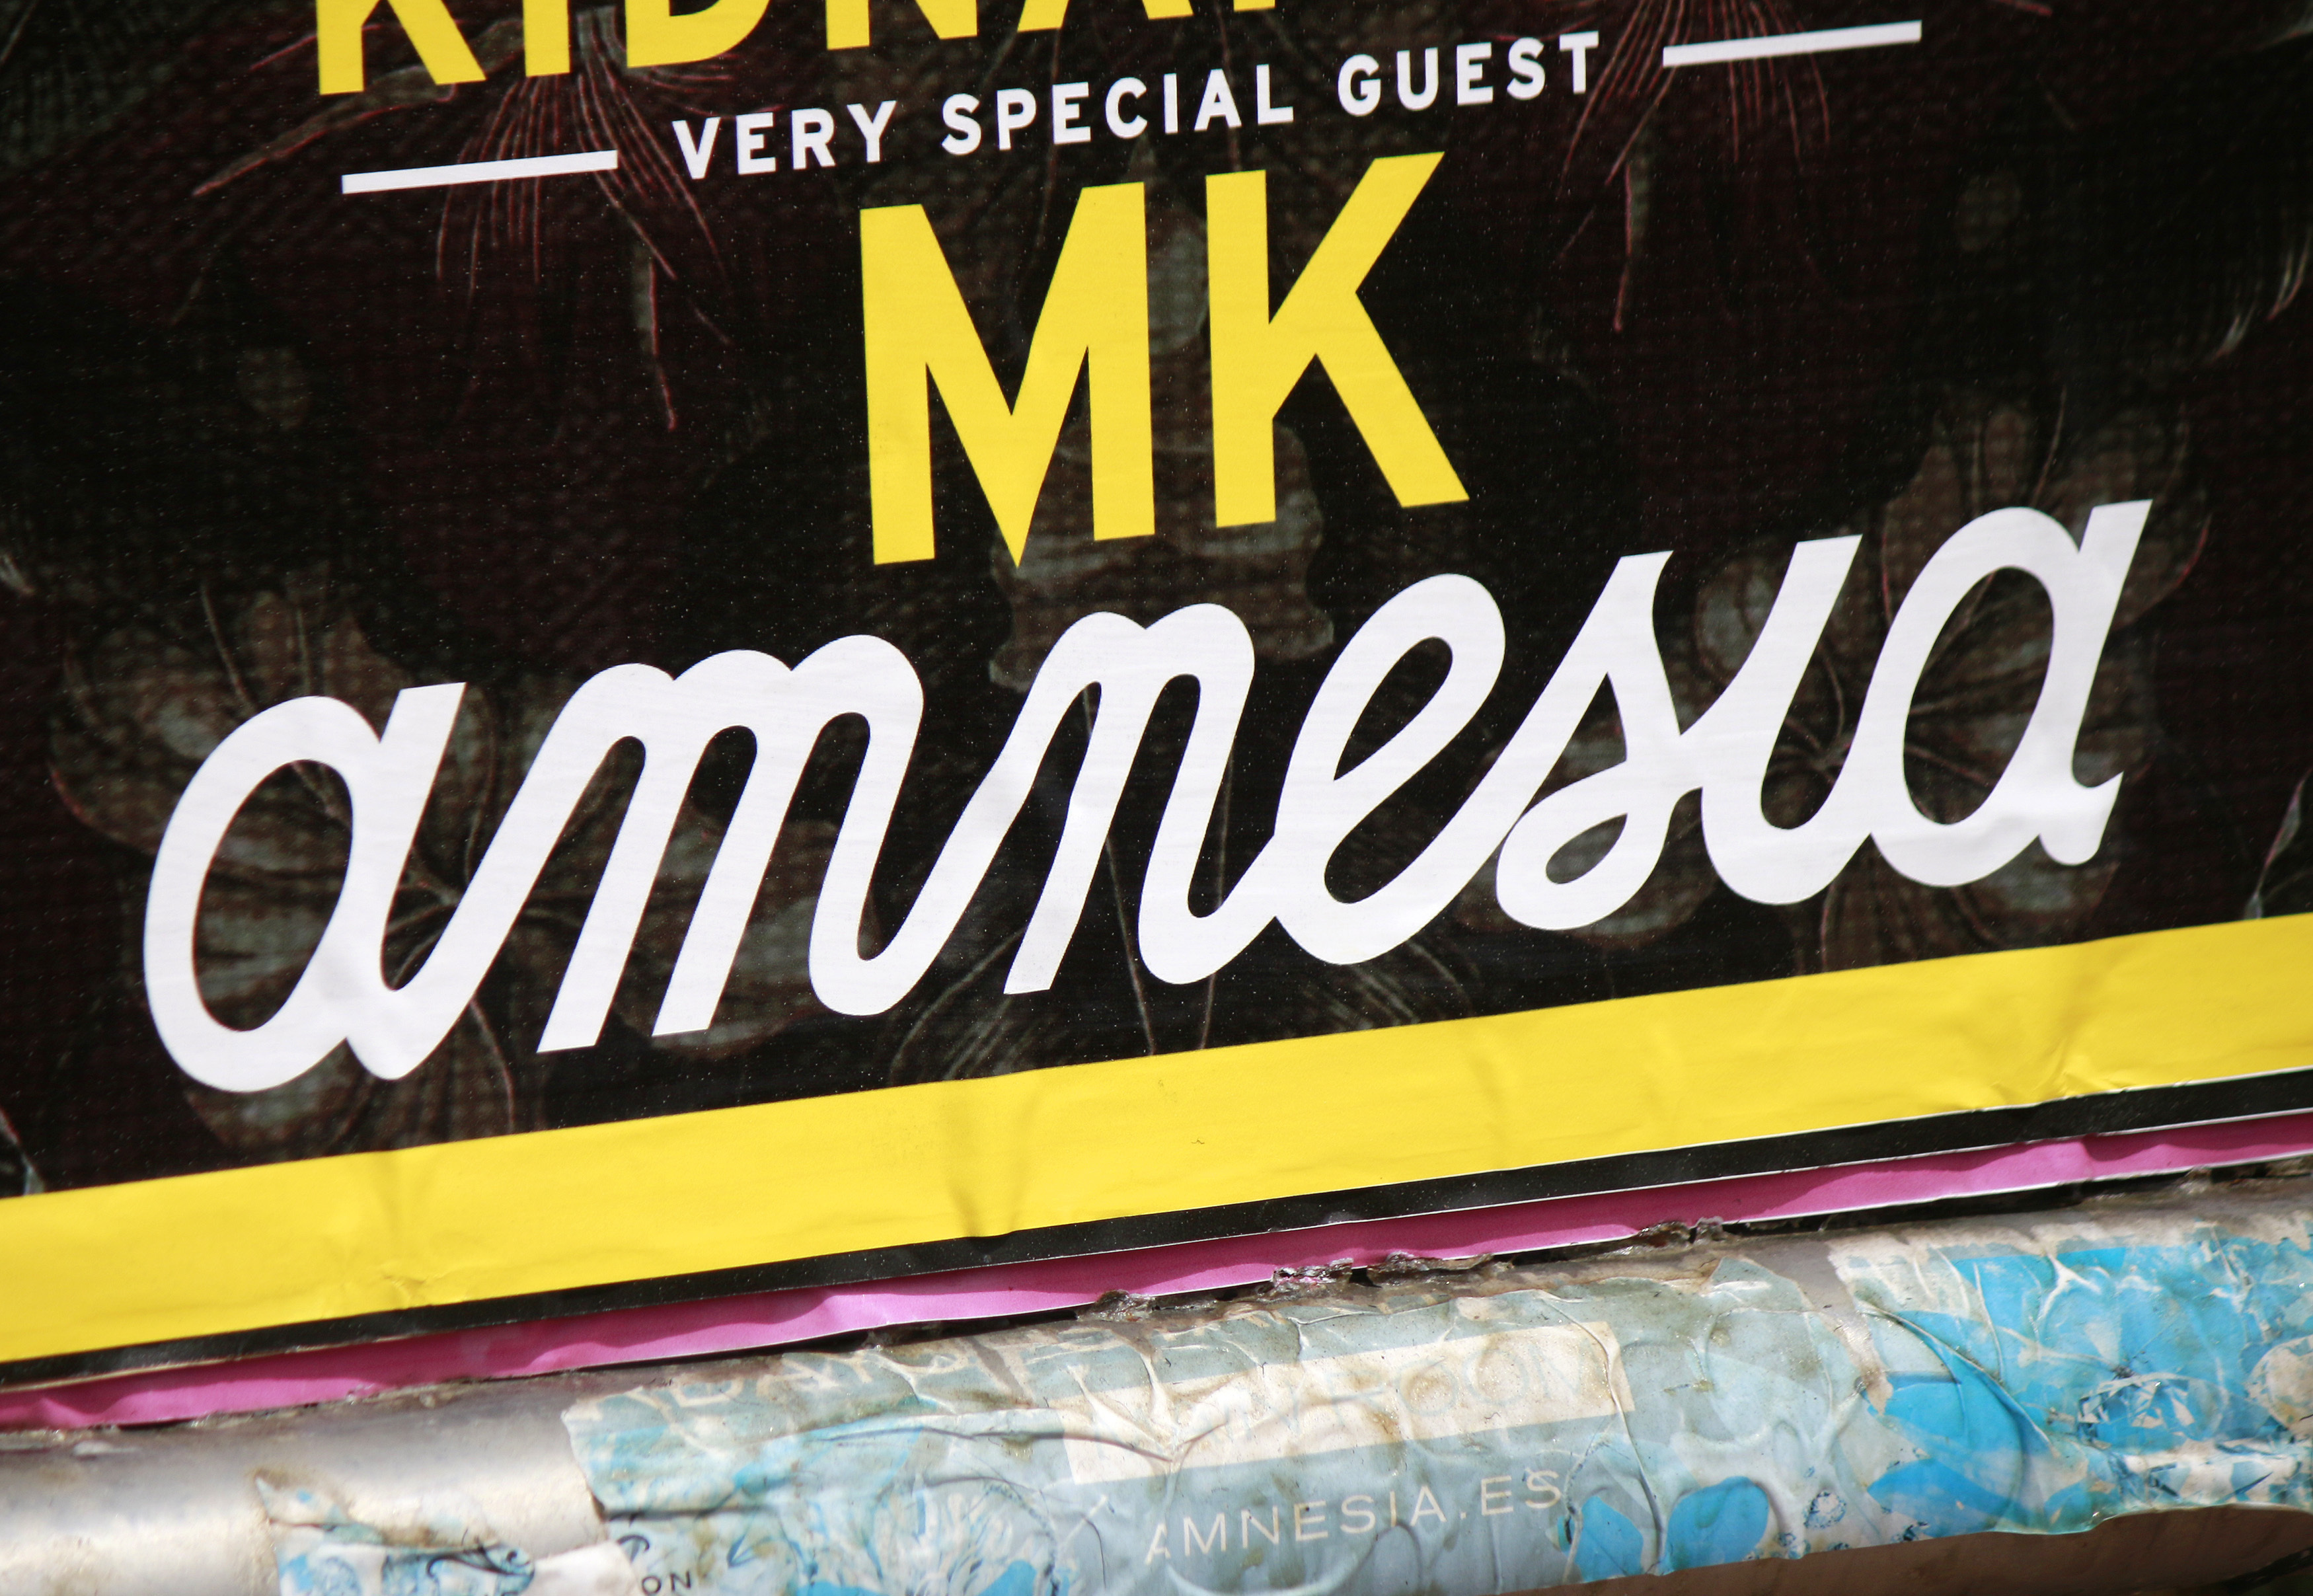 Amnesia nightclub Ibiza door sign